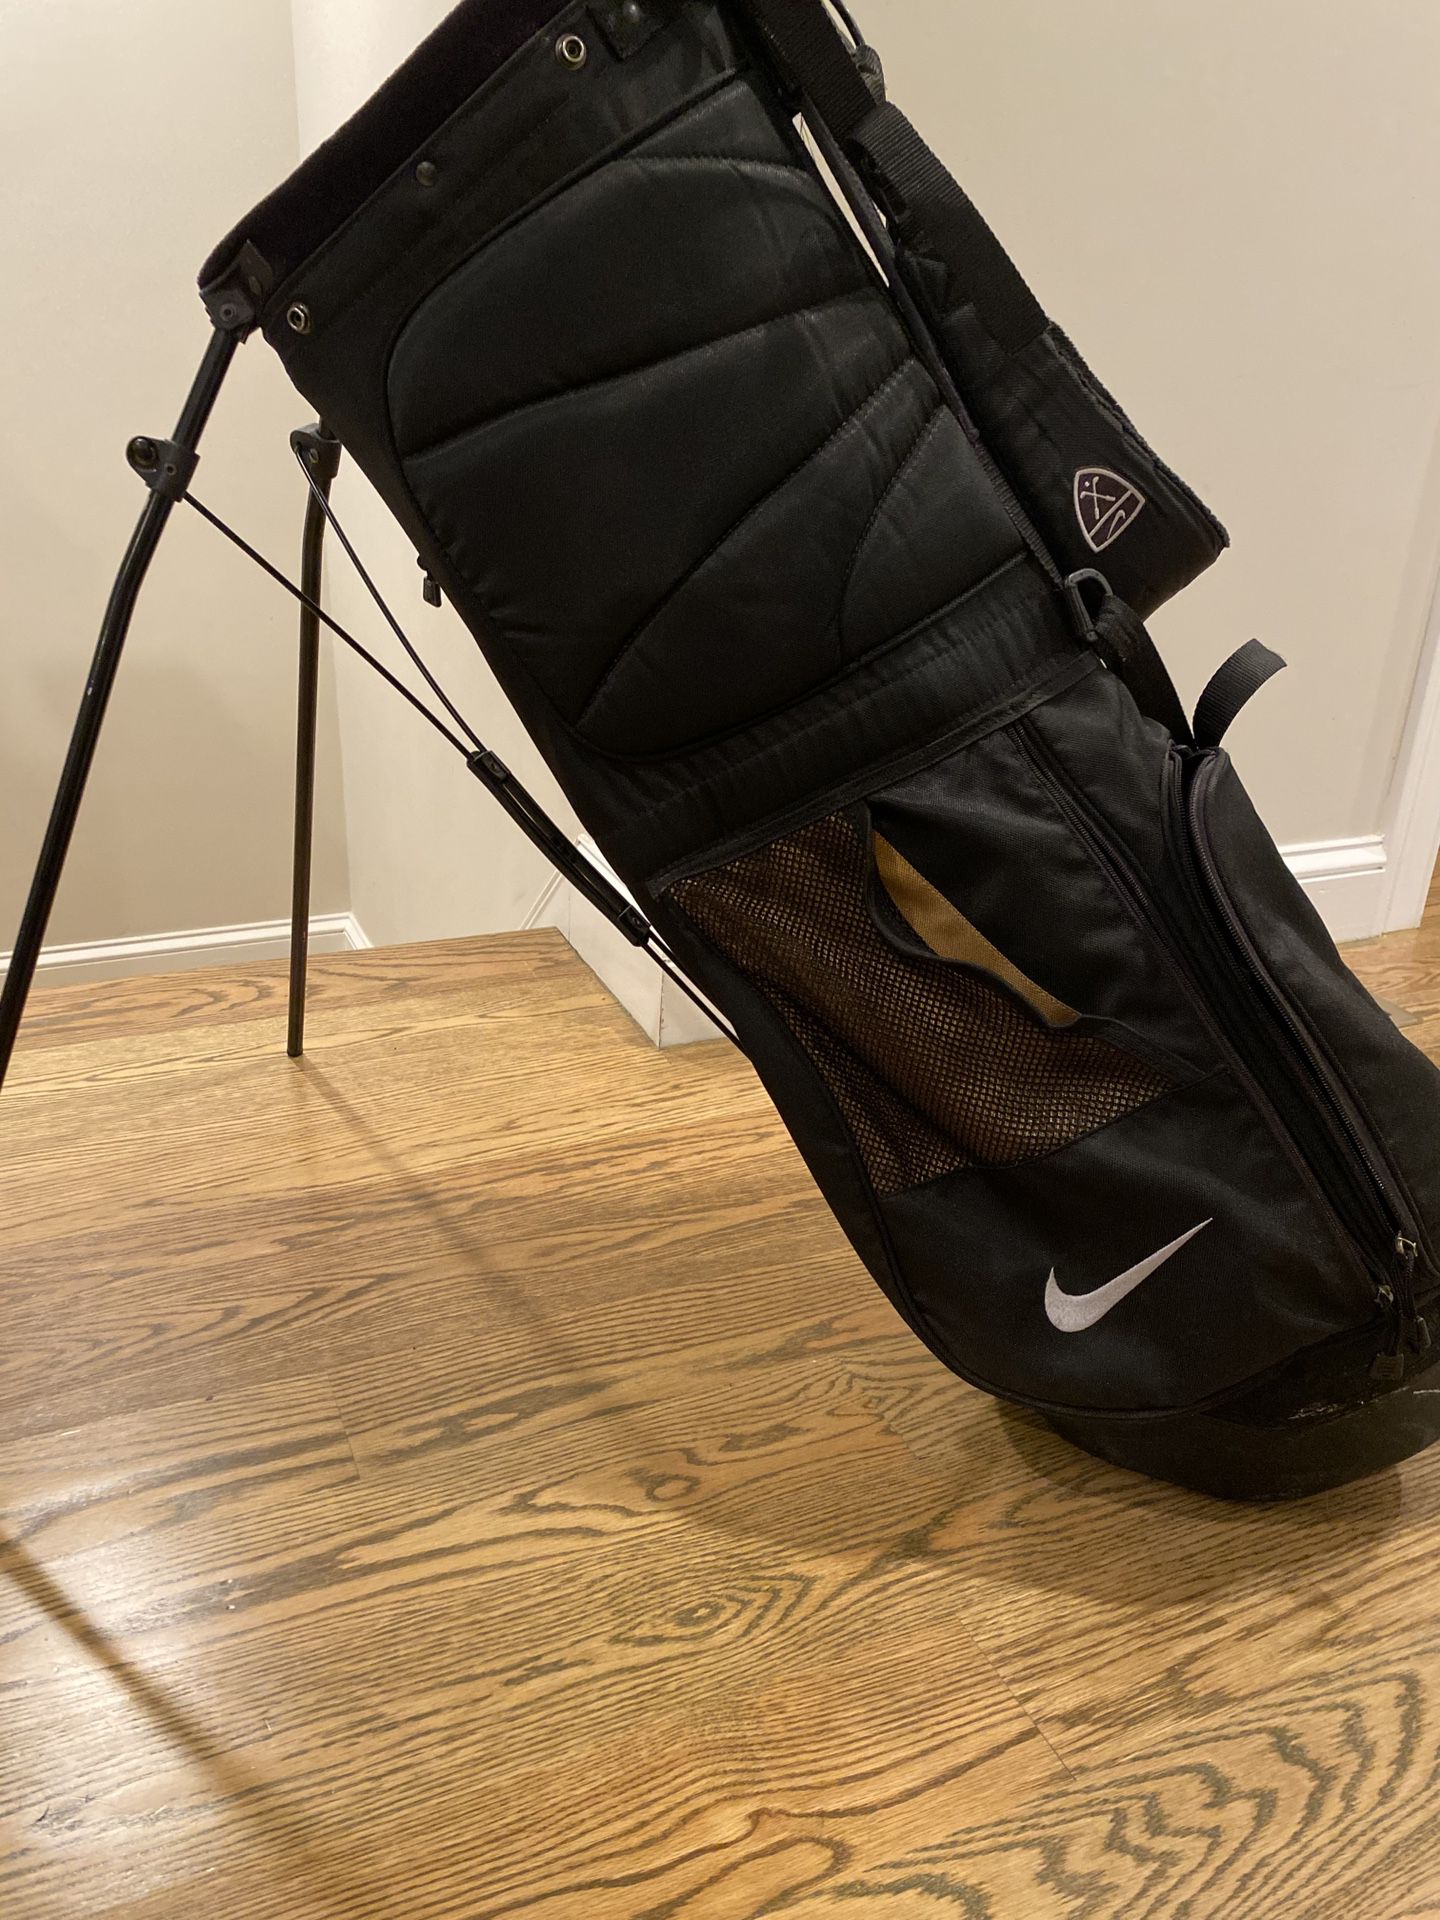 Used Nike Golf Bag - Mens